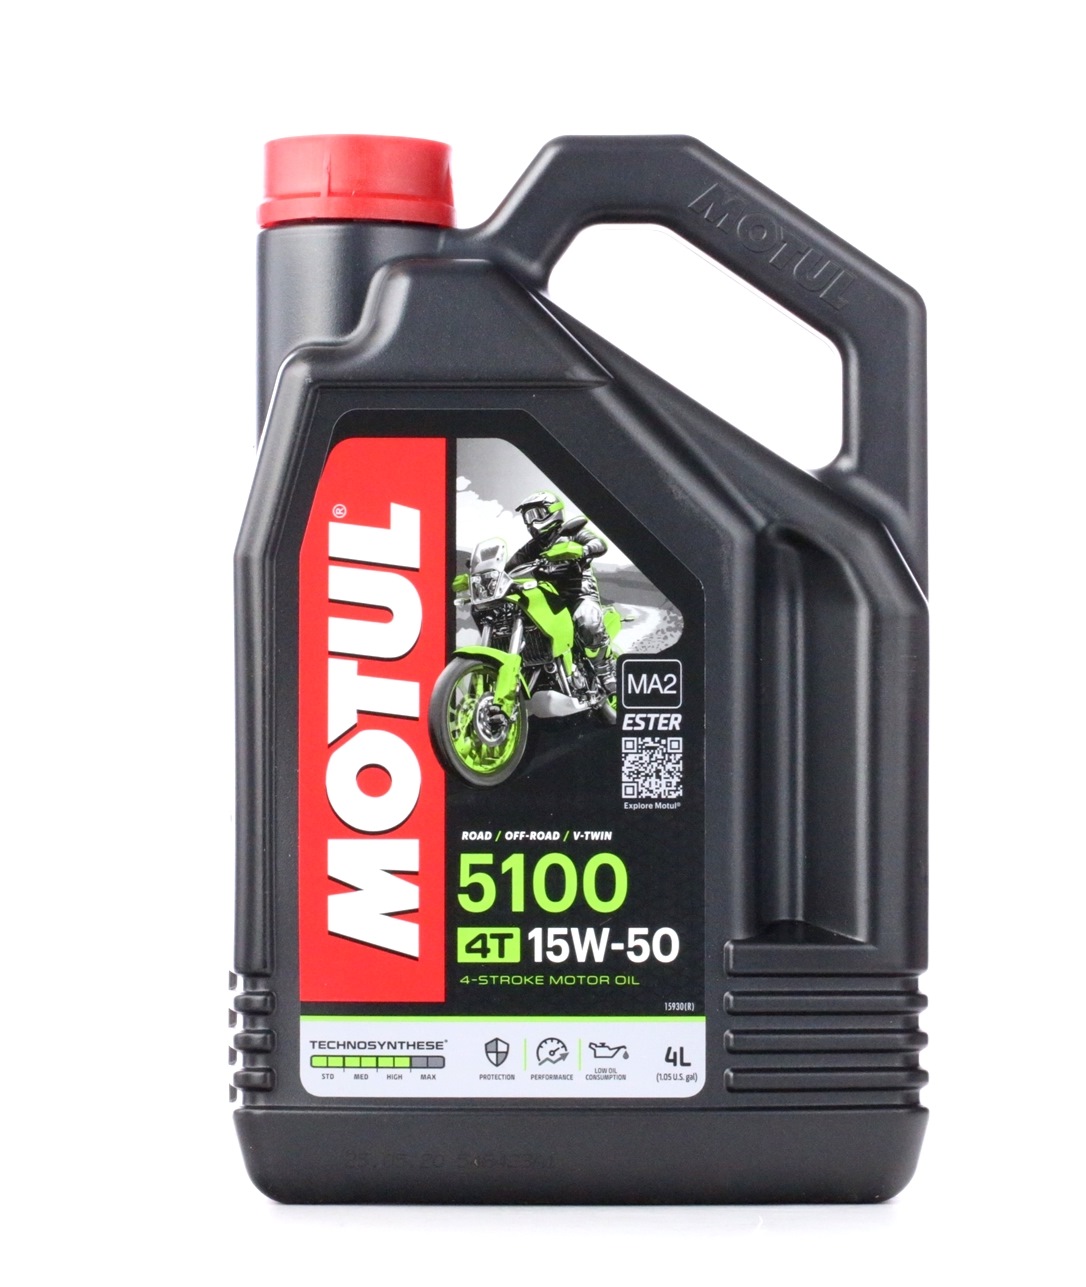 Car oil API SG MOTUL - 104083 4T